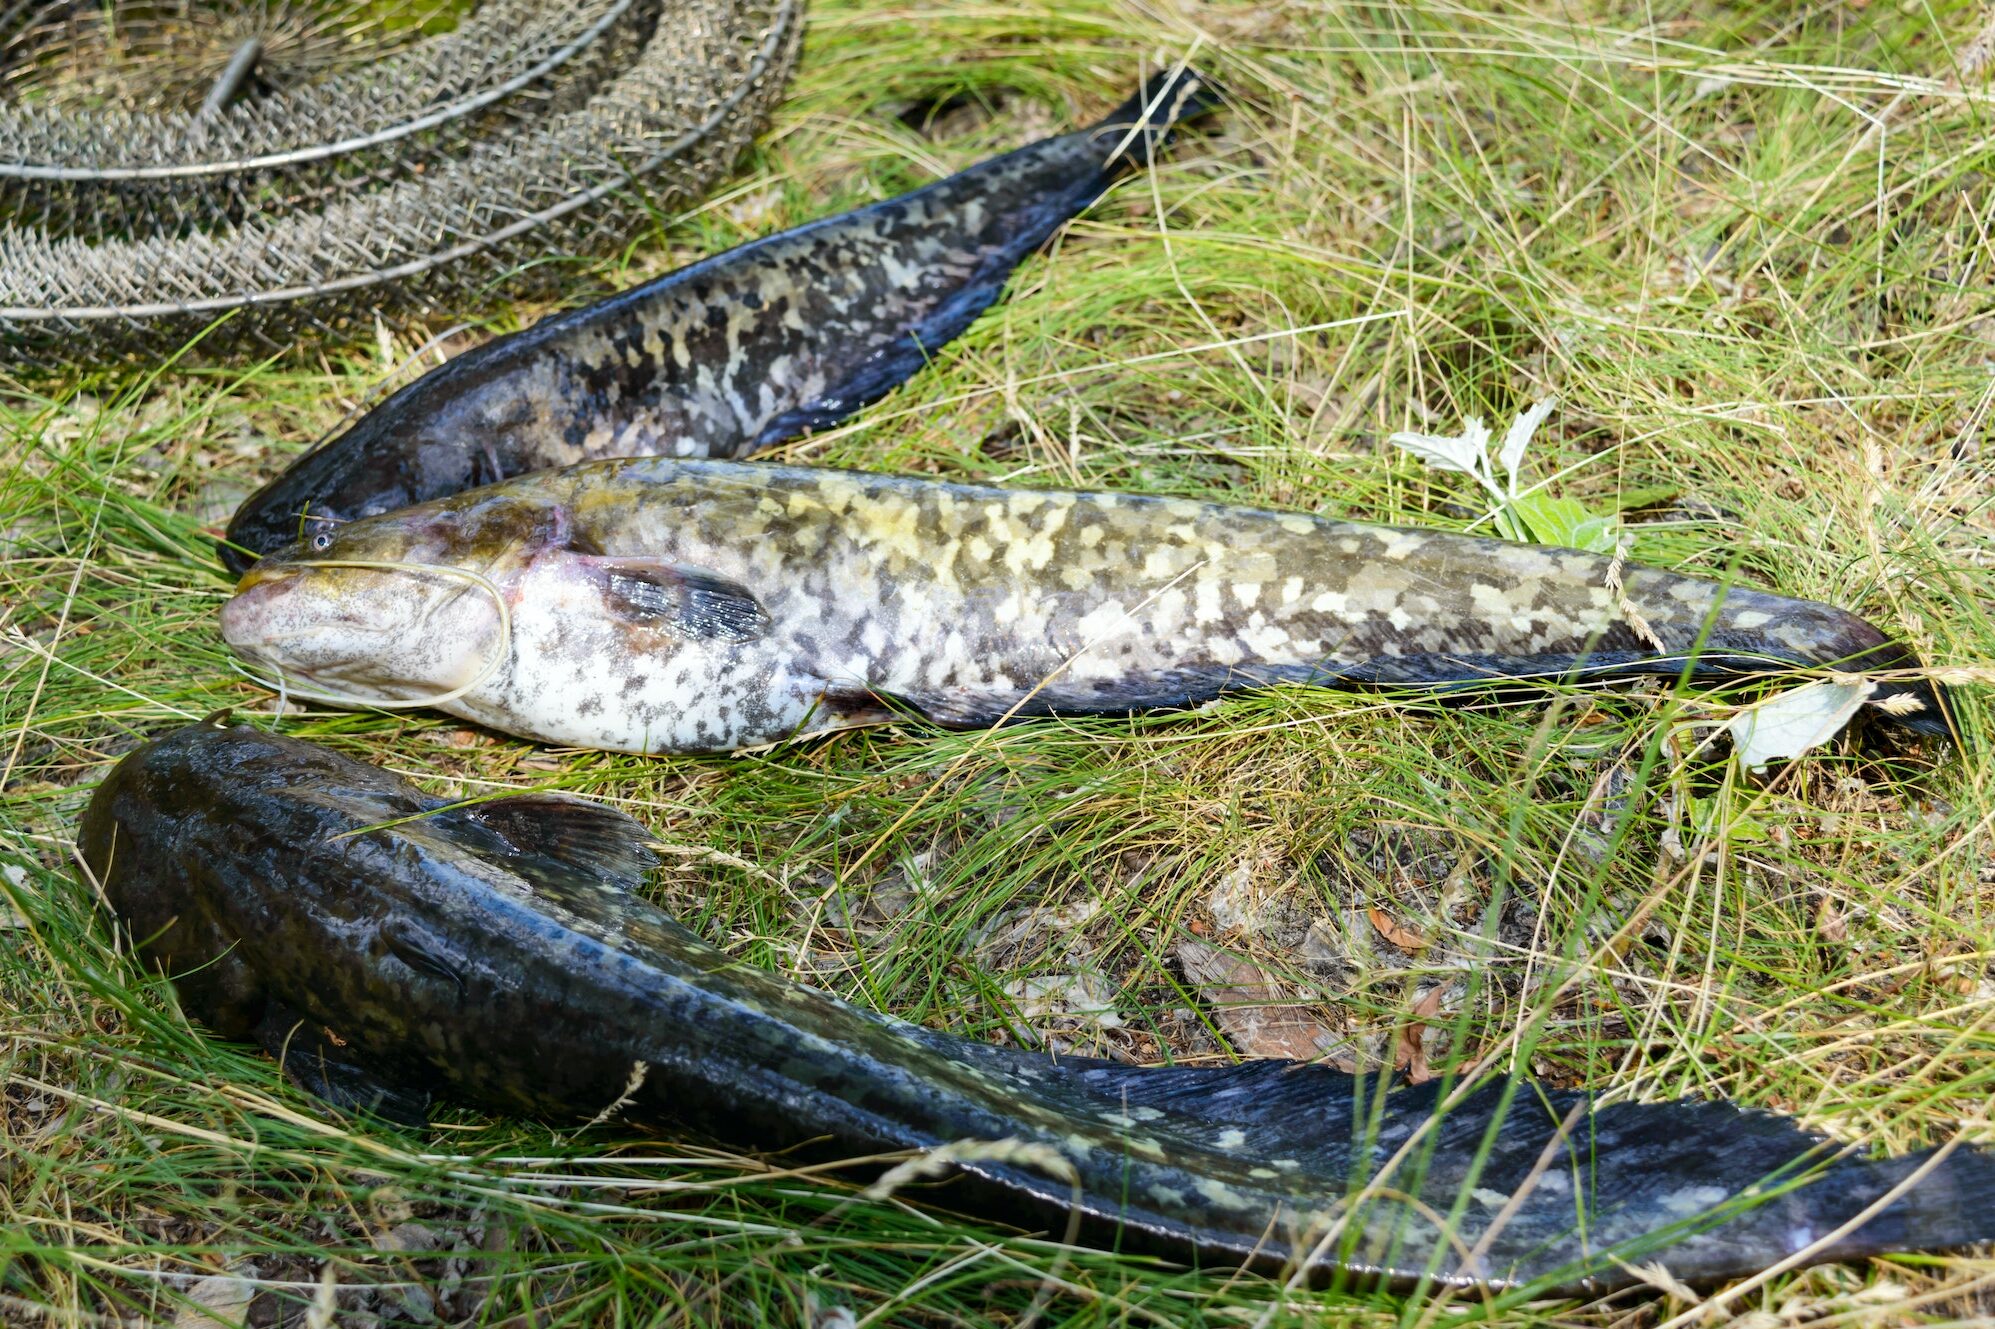 Live catfish lie on the grass. Fresh catch.